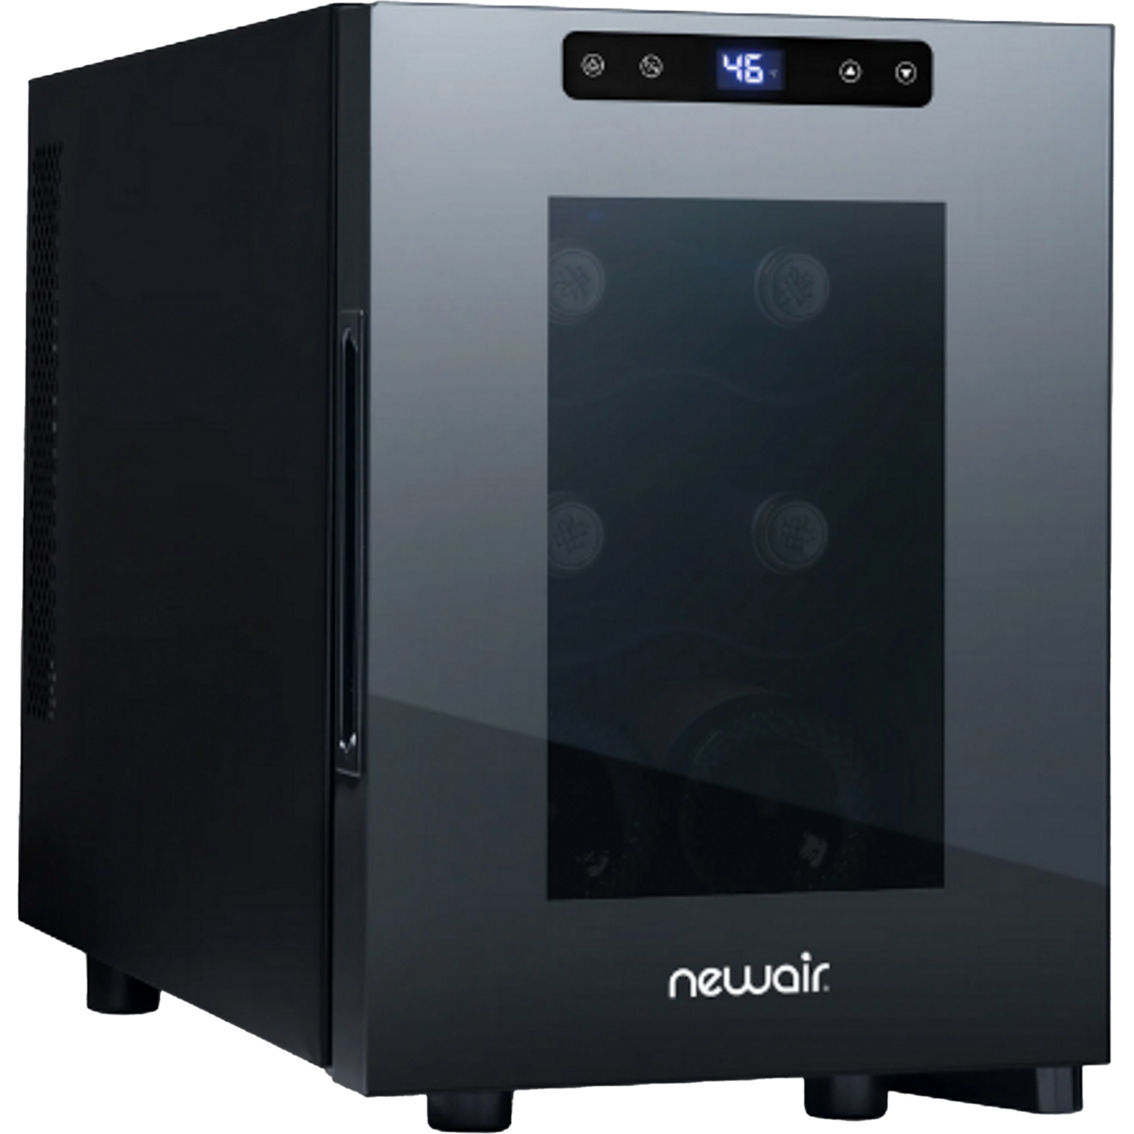 NewAir Shadow-T Series Wine Cooler Refrigerator - Image 2 of 7